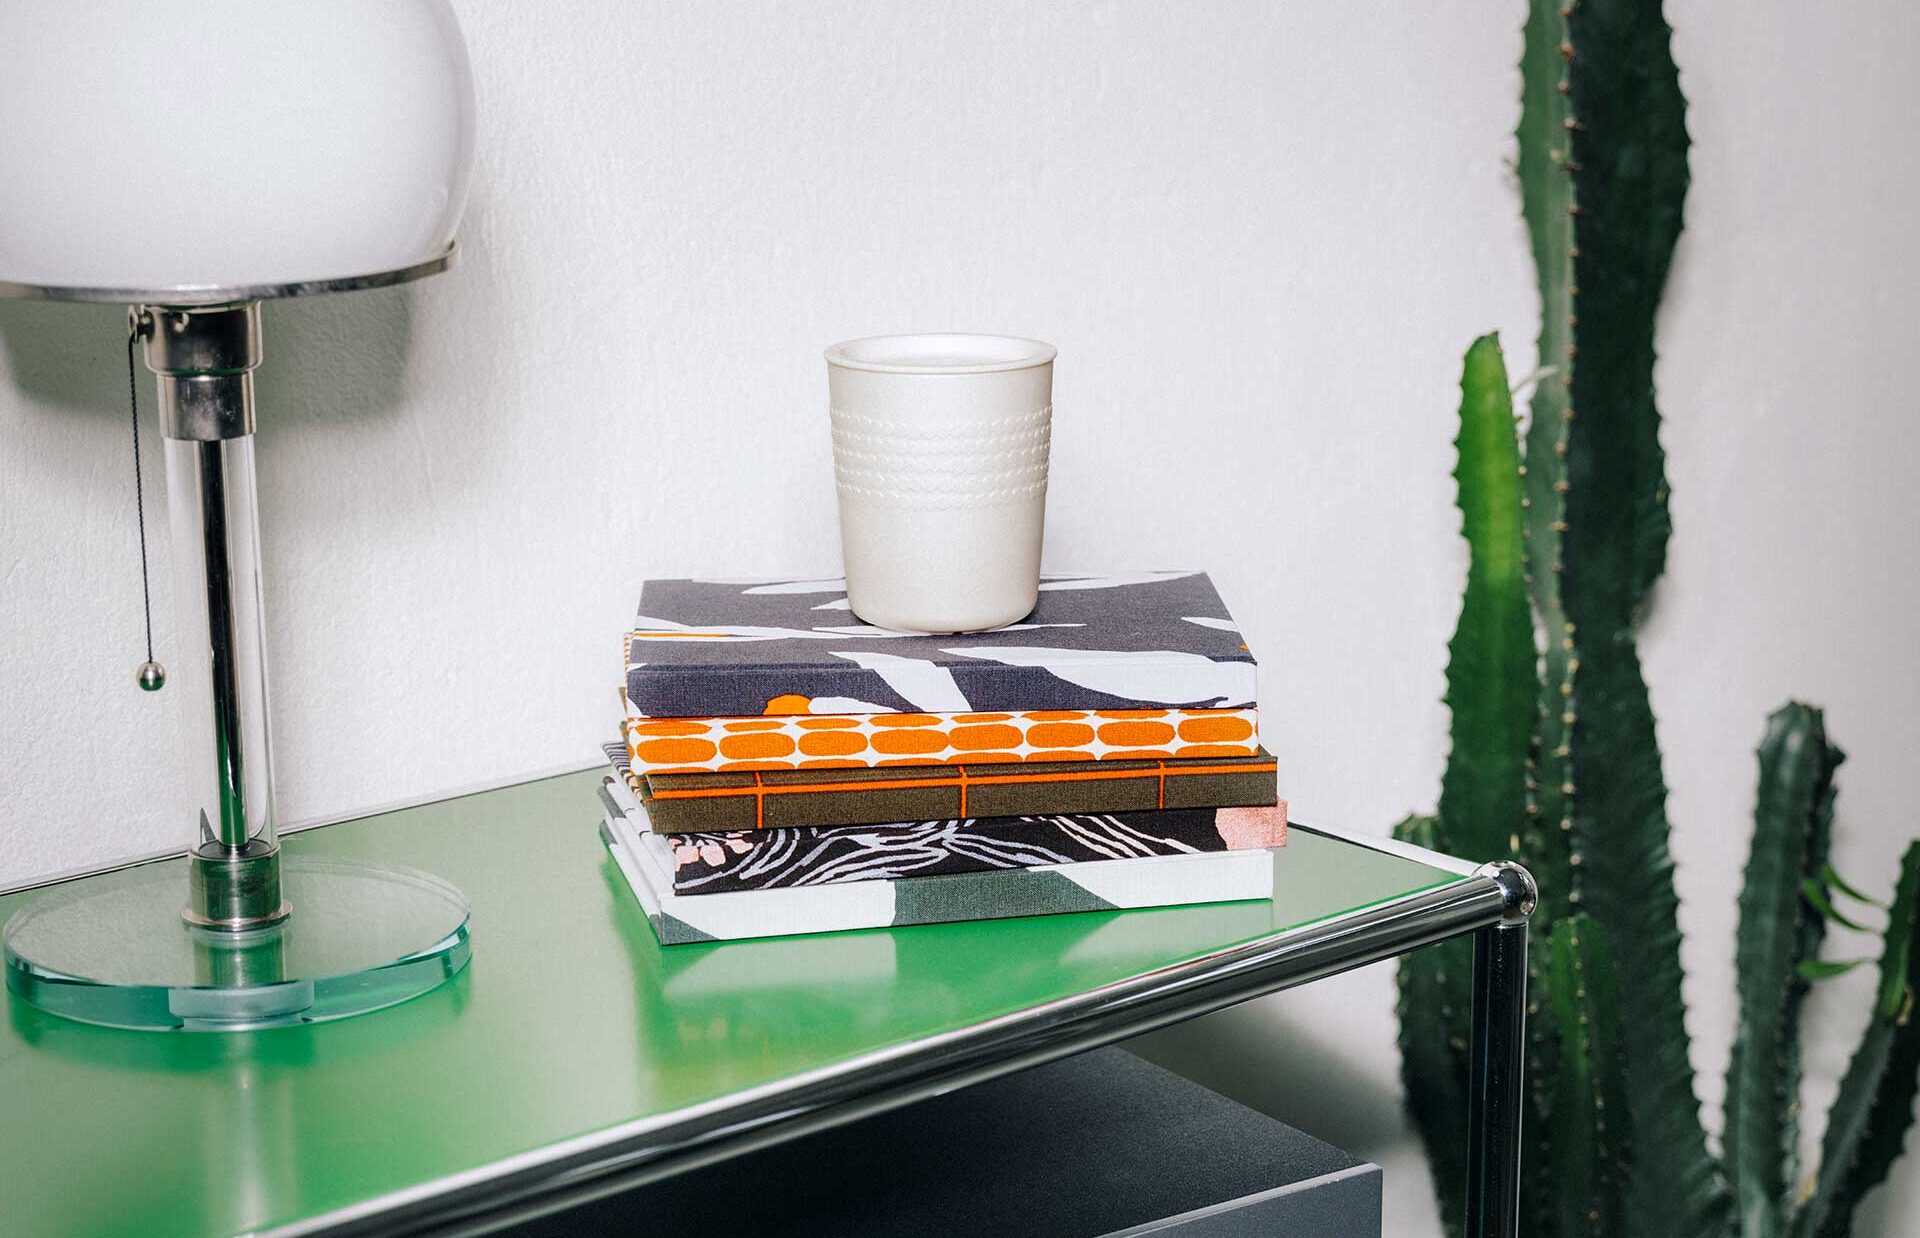 Marimekko Marimade take-away mug made with Sulapac’s latest eco-safe material innovation